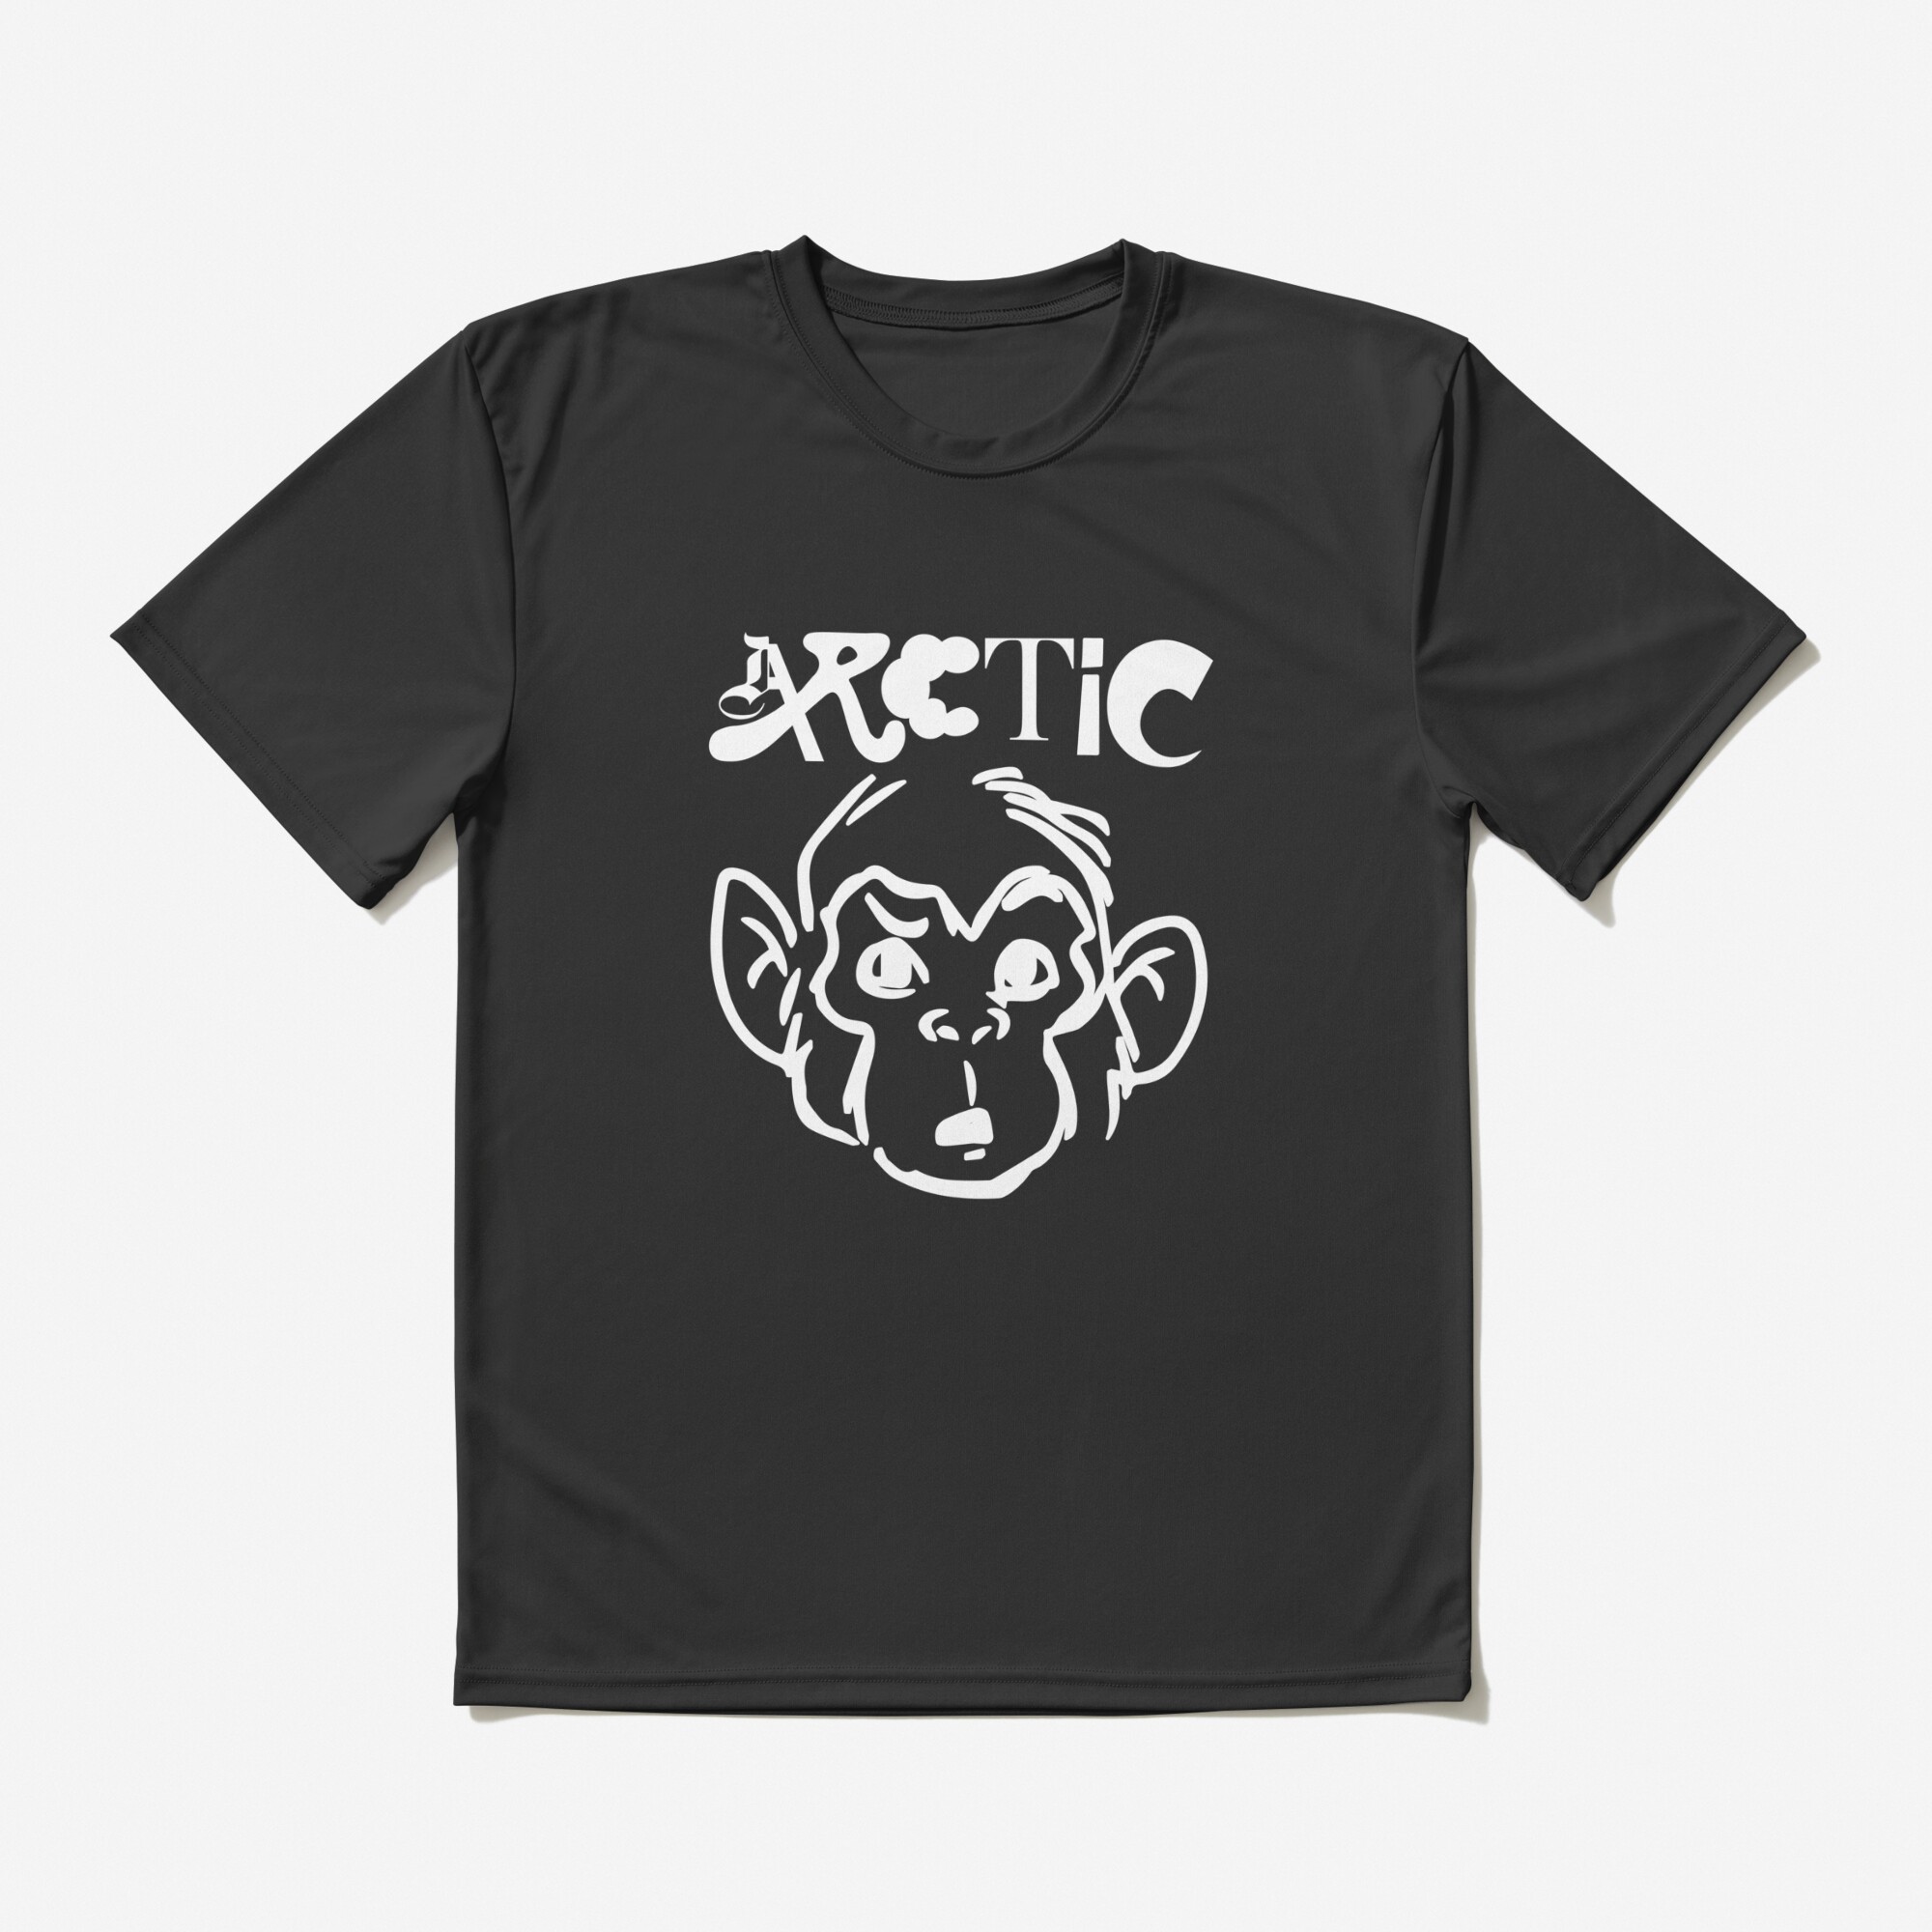 ssrcoactive tshirtflatlay10101001c5ca27c6frontsquare2000x2000 4 - Arctic Monkeys Shop